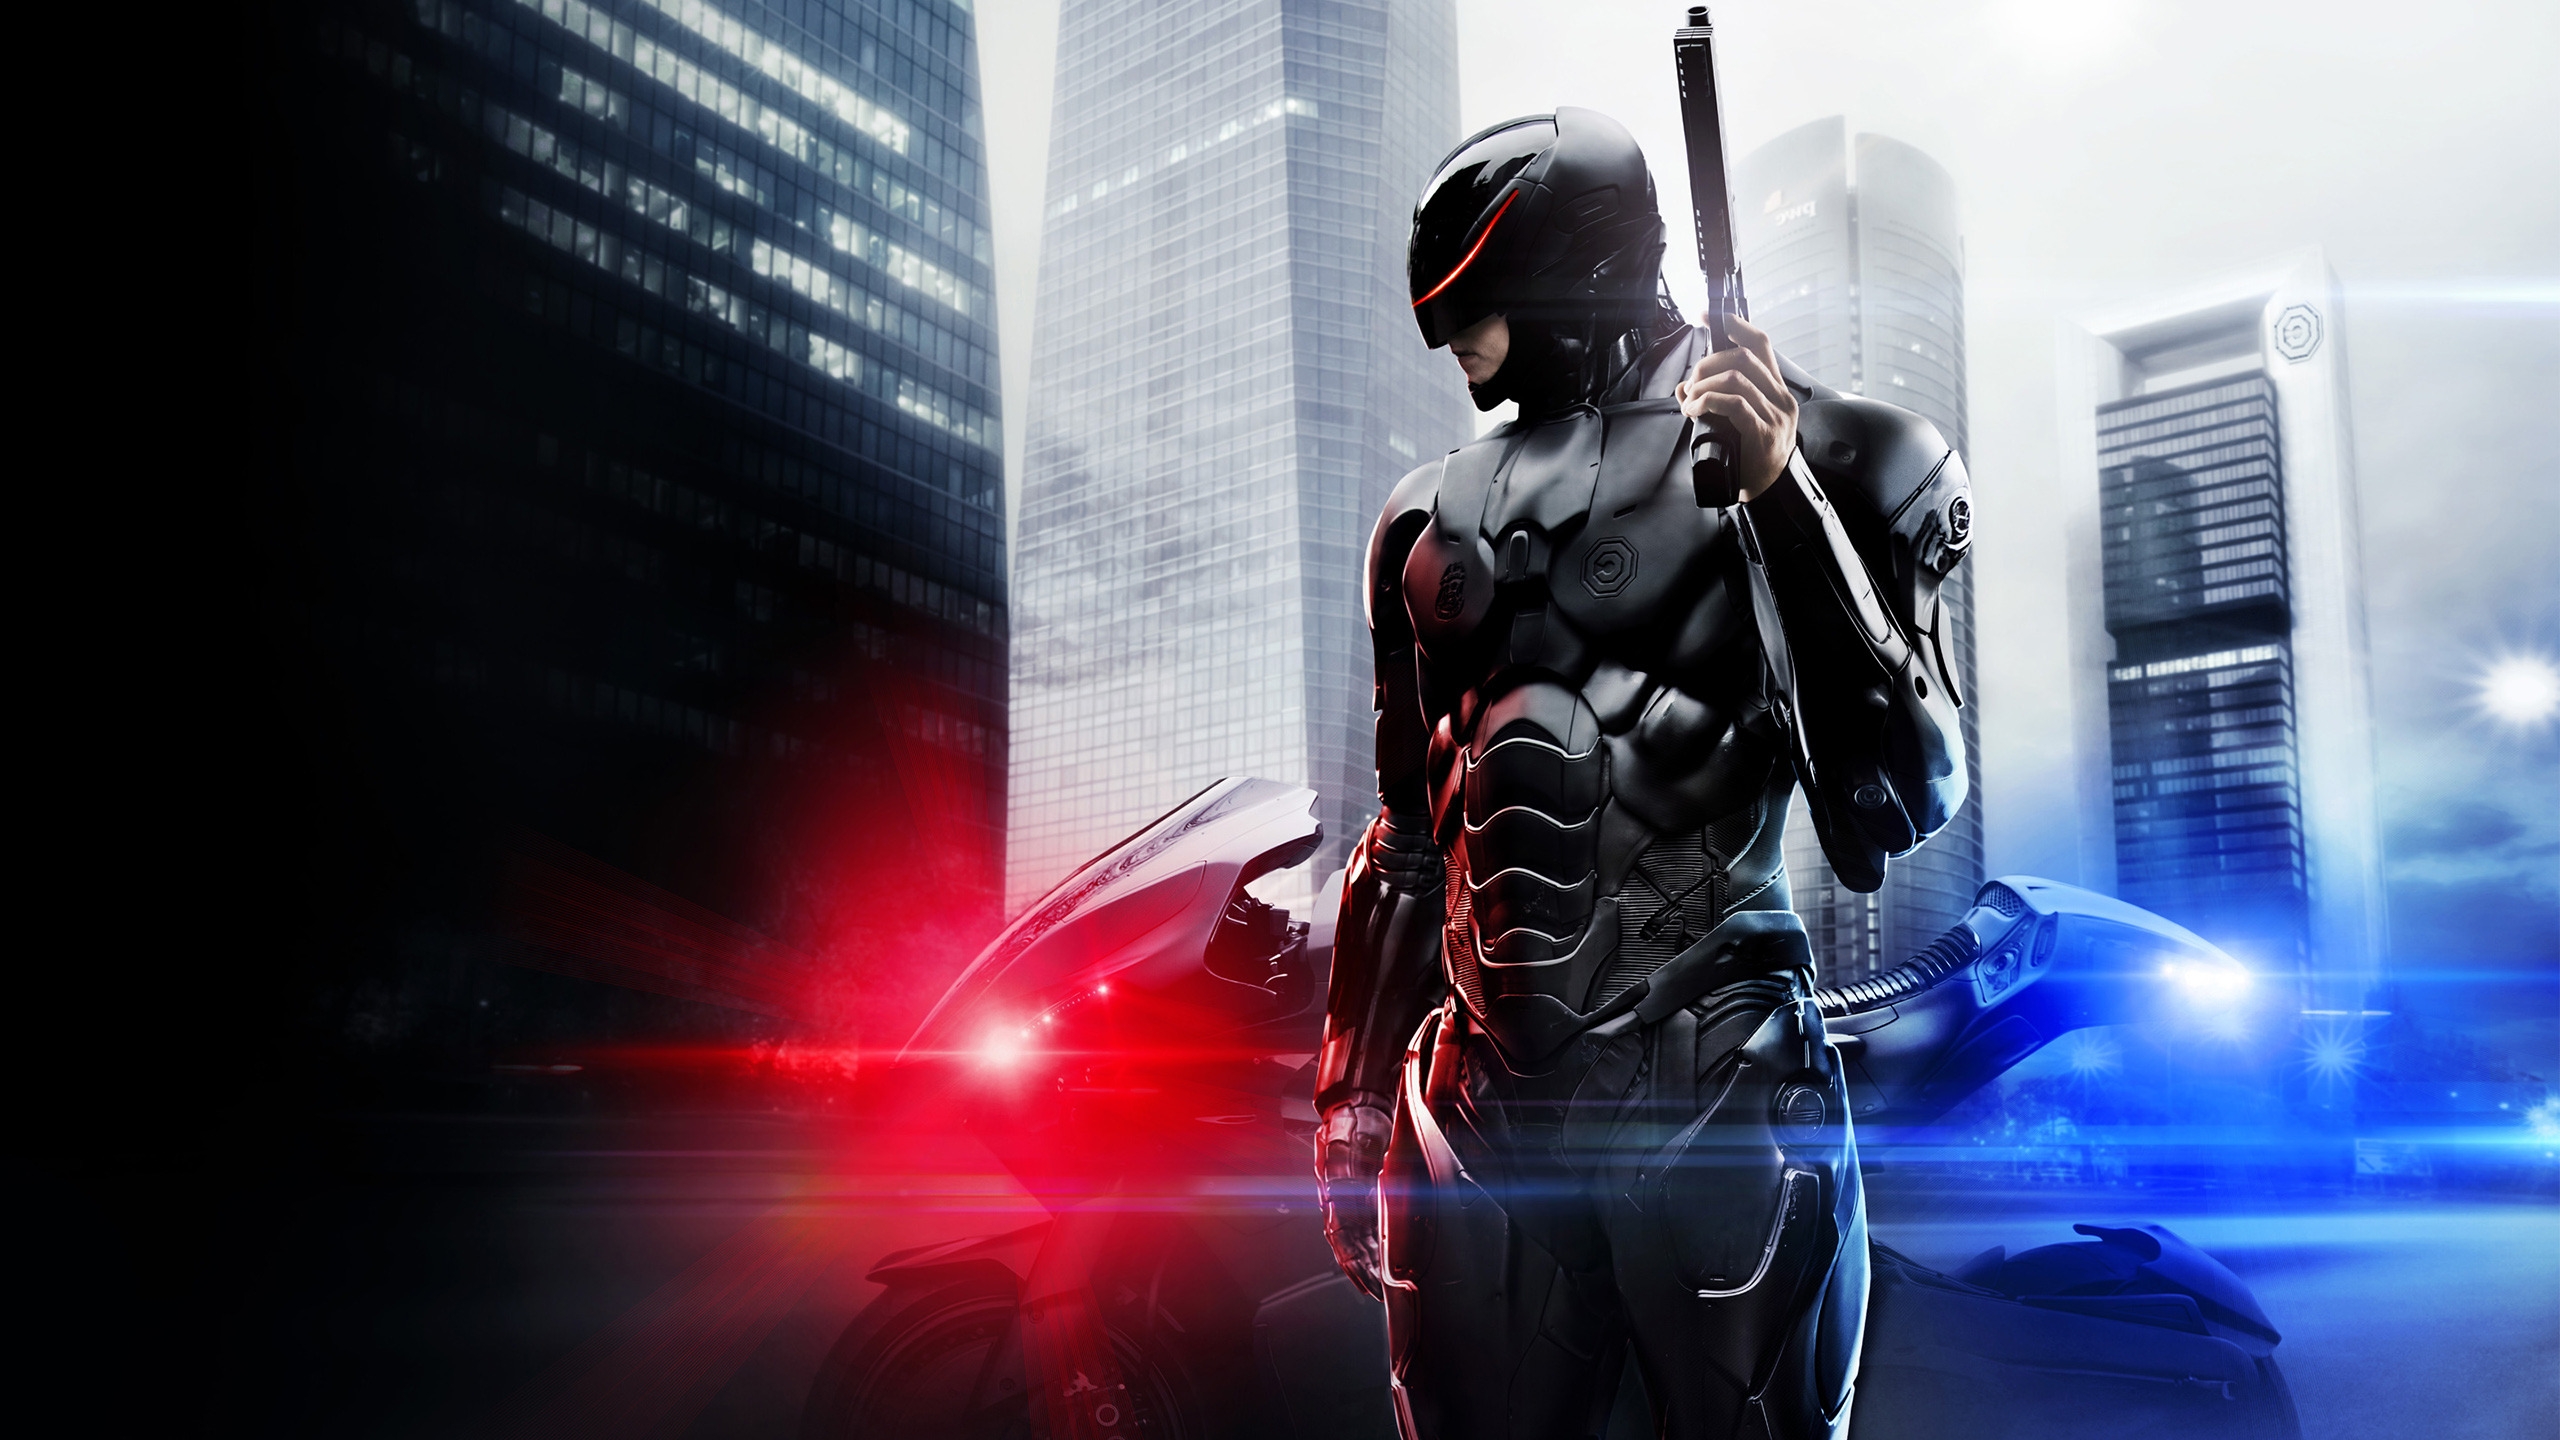 Robocop Movie 2014 for 2560x1440 HDTV resolution